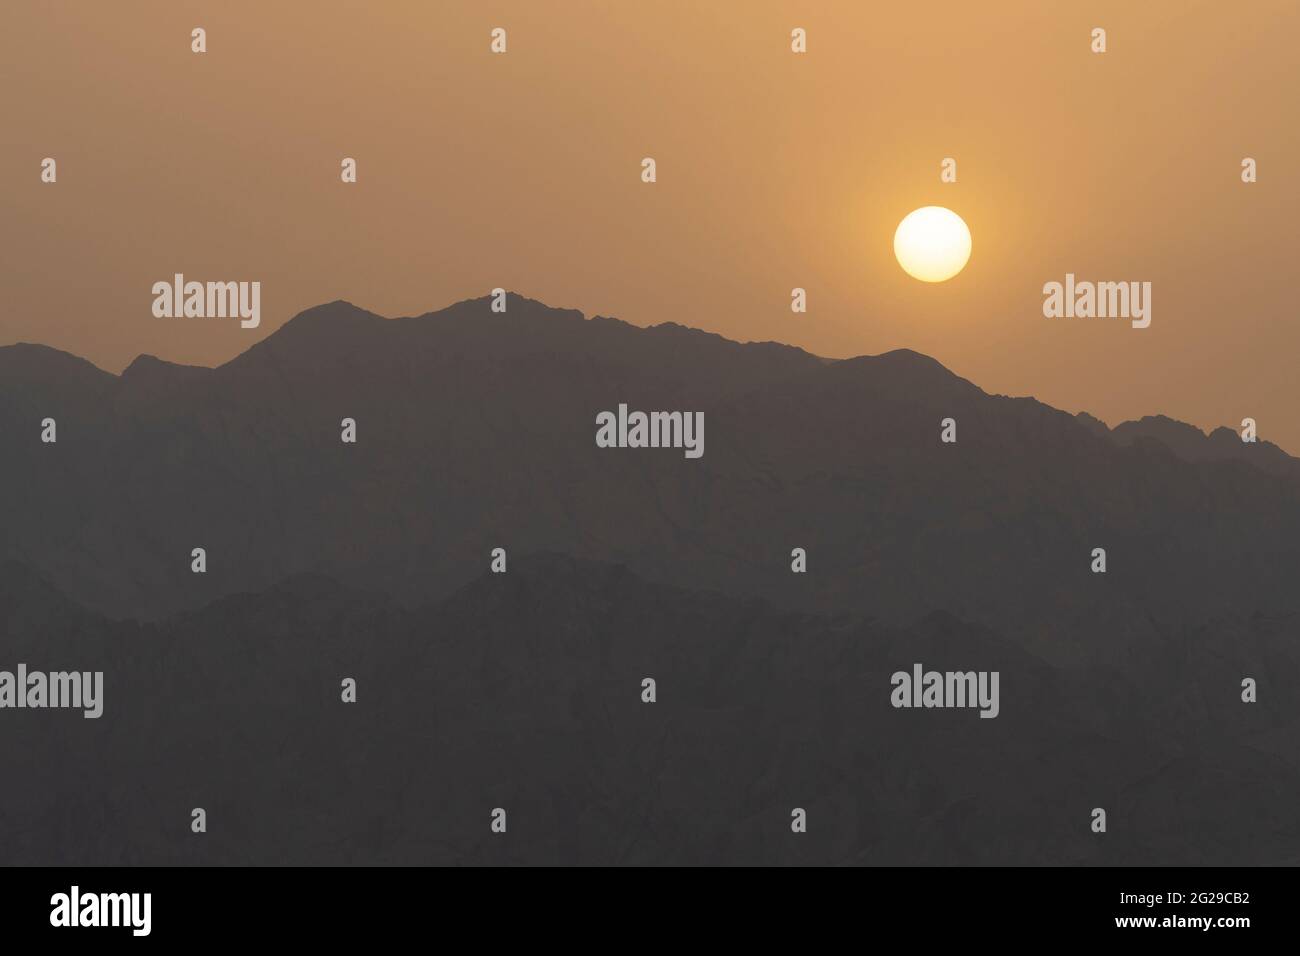 A hazy sunrise over the Edom mountain ridges, Jordan, as viewed from Israel. Stock Photo